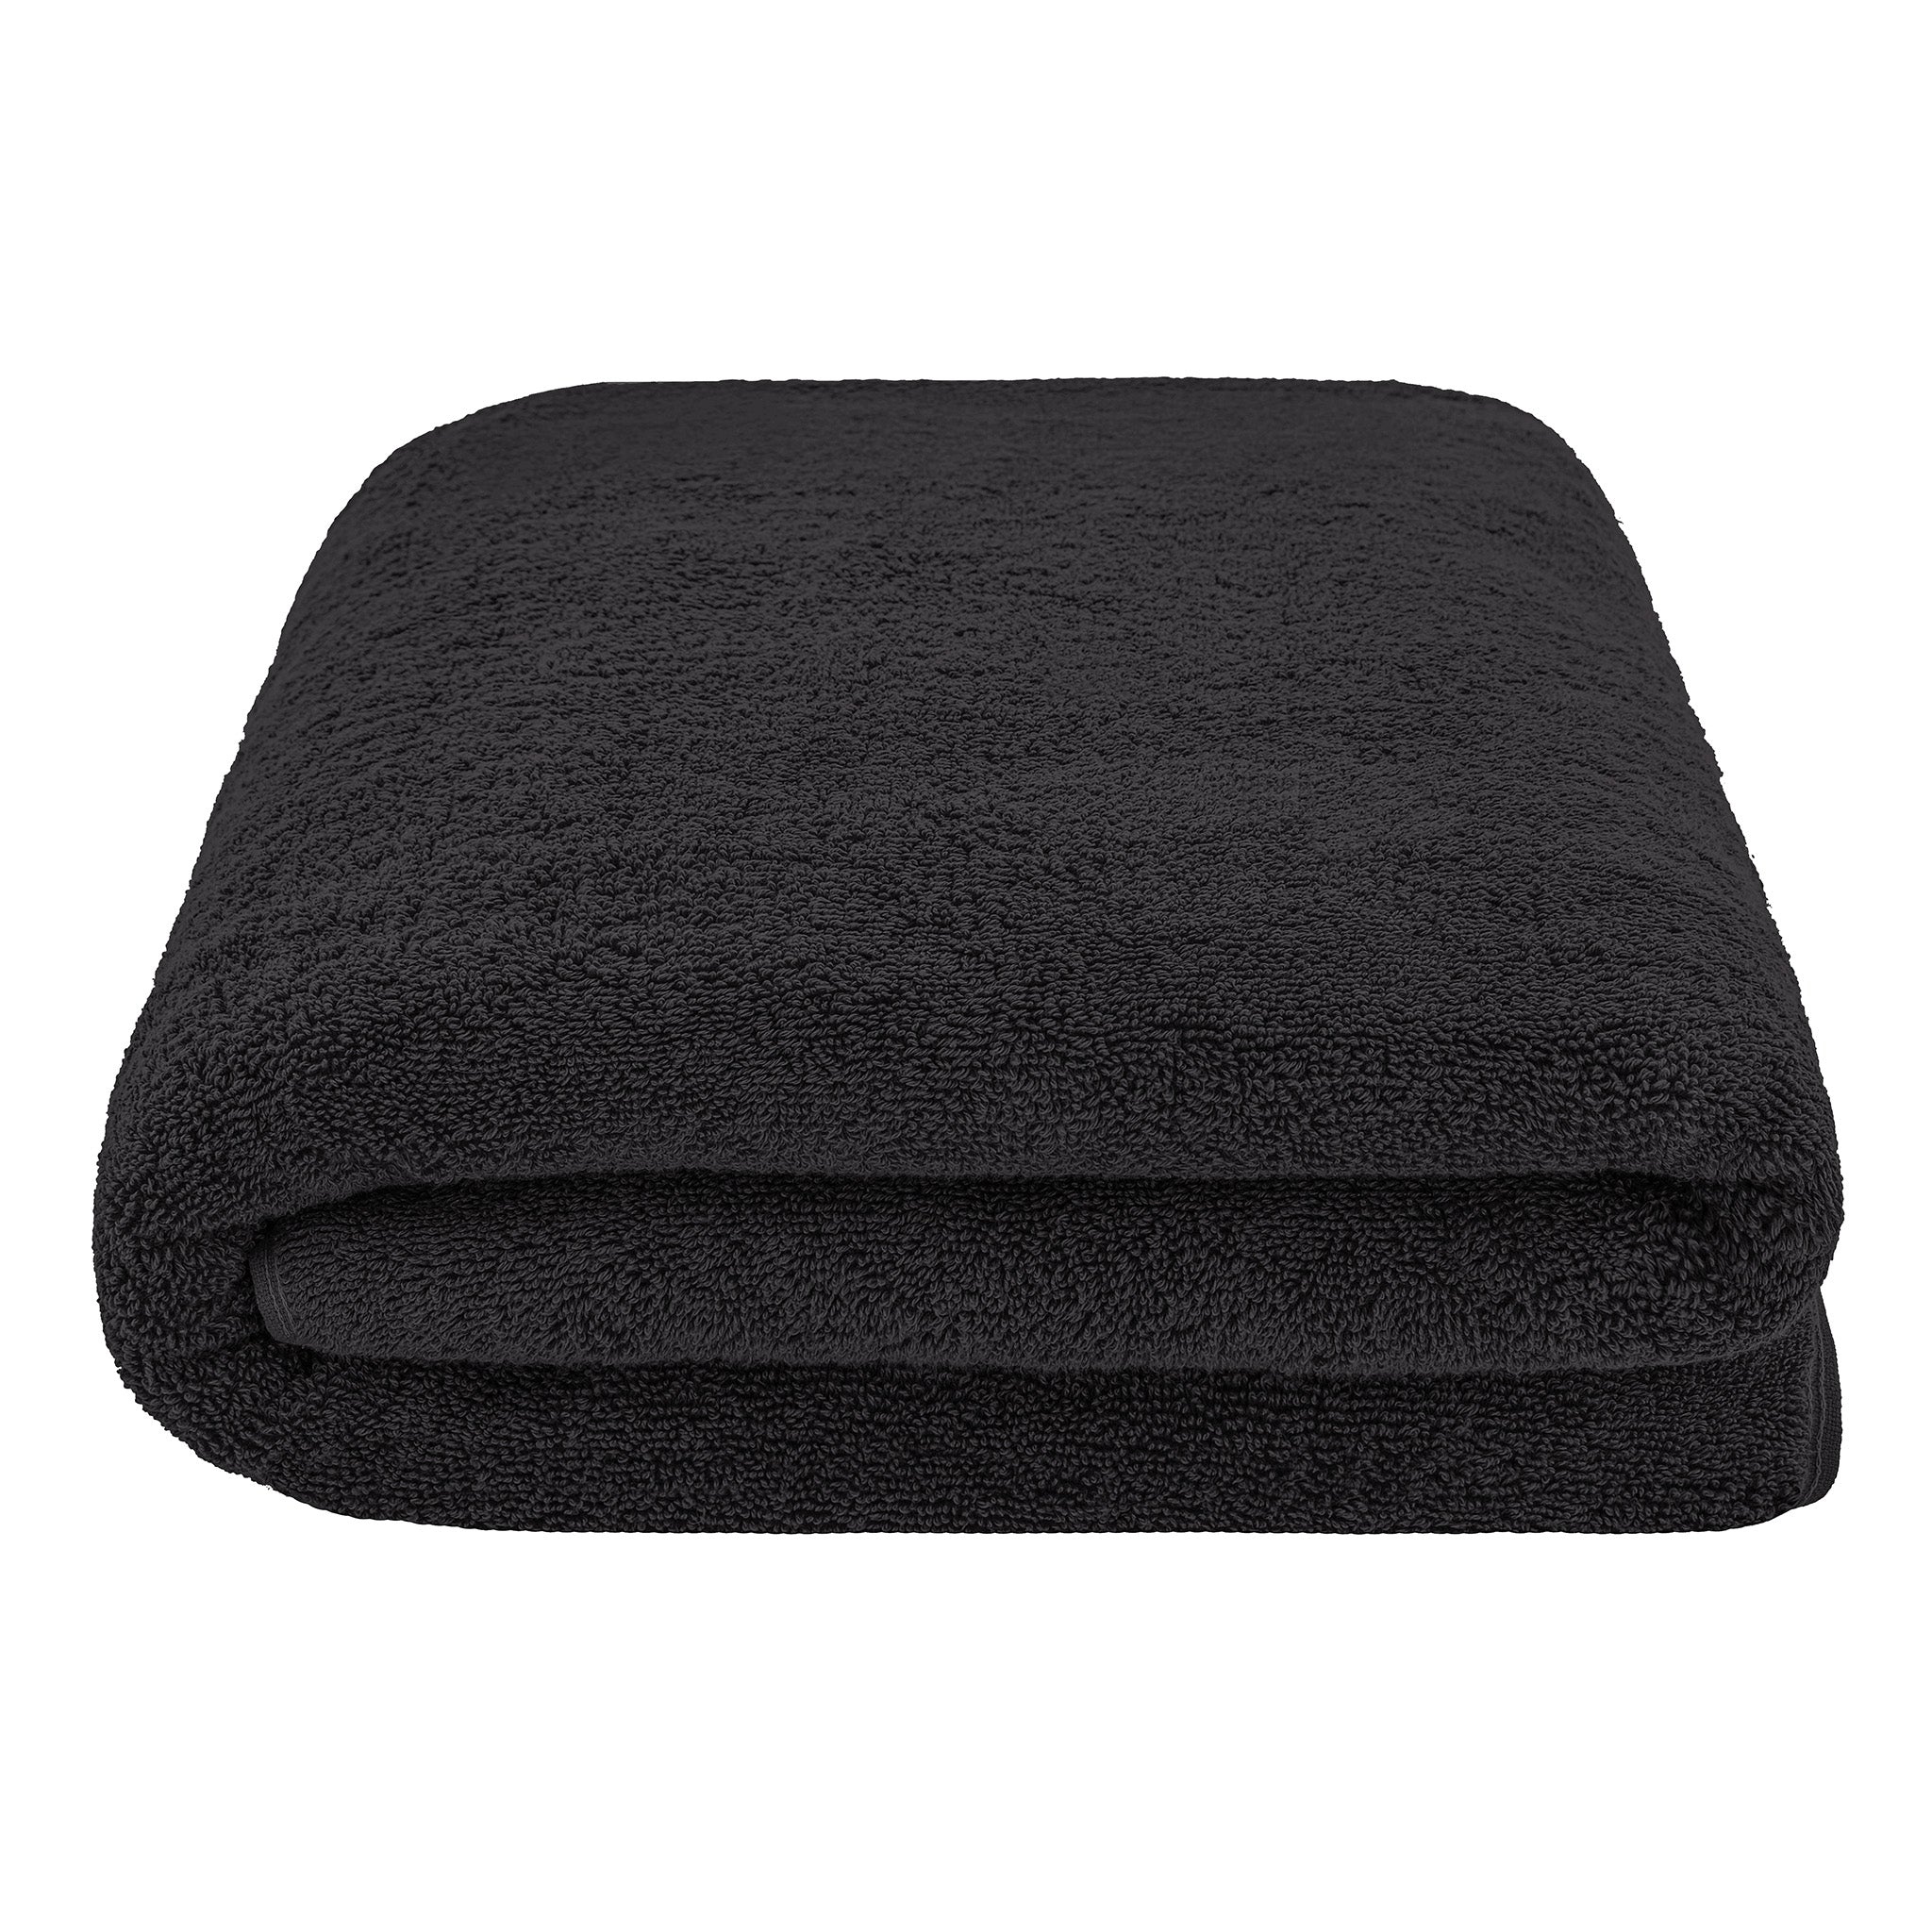 American Soft Linen Bath Sheet 40x80 inch 100% Cotton Extra Large Oversized Bath Towel Sheet - Coal Black, Size: Oversized Bath Sheet 40x80